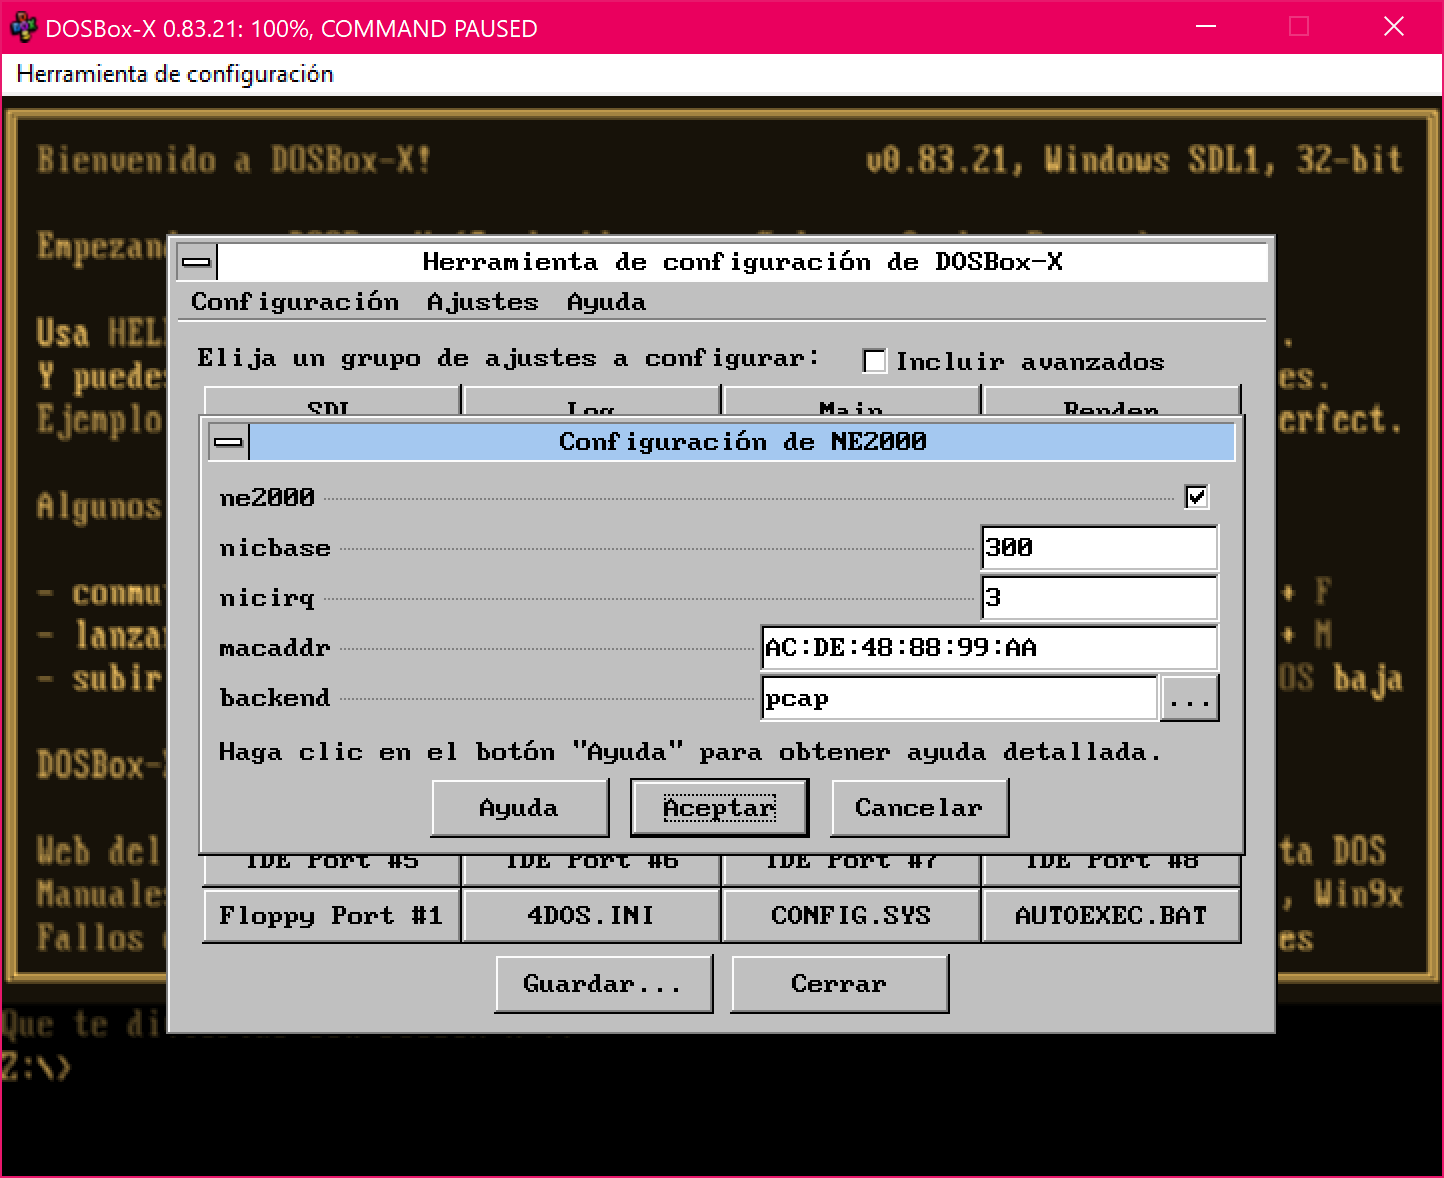 Configuration Tool running in DOSBox-X